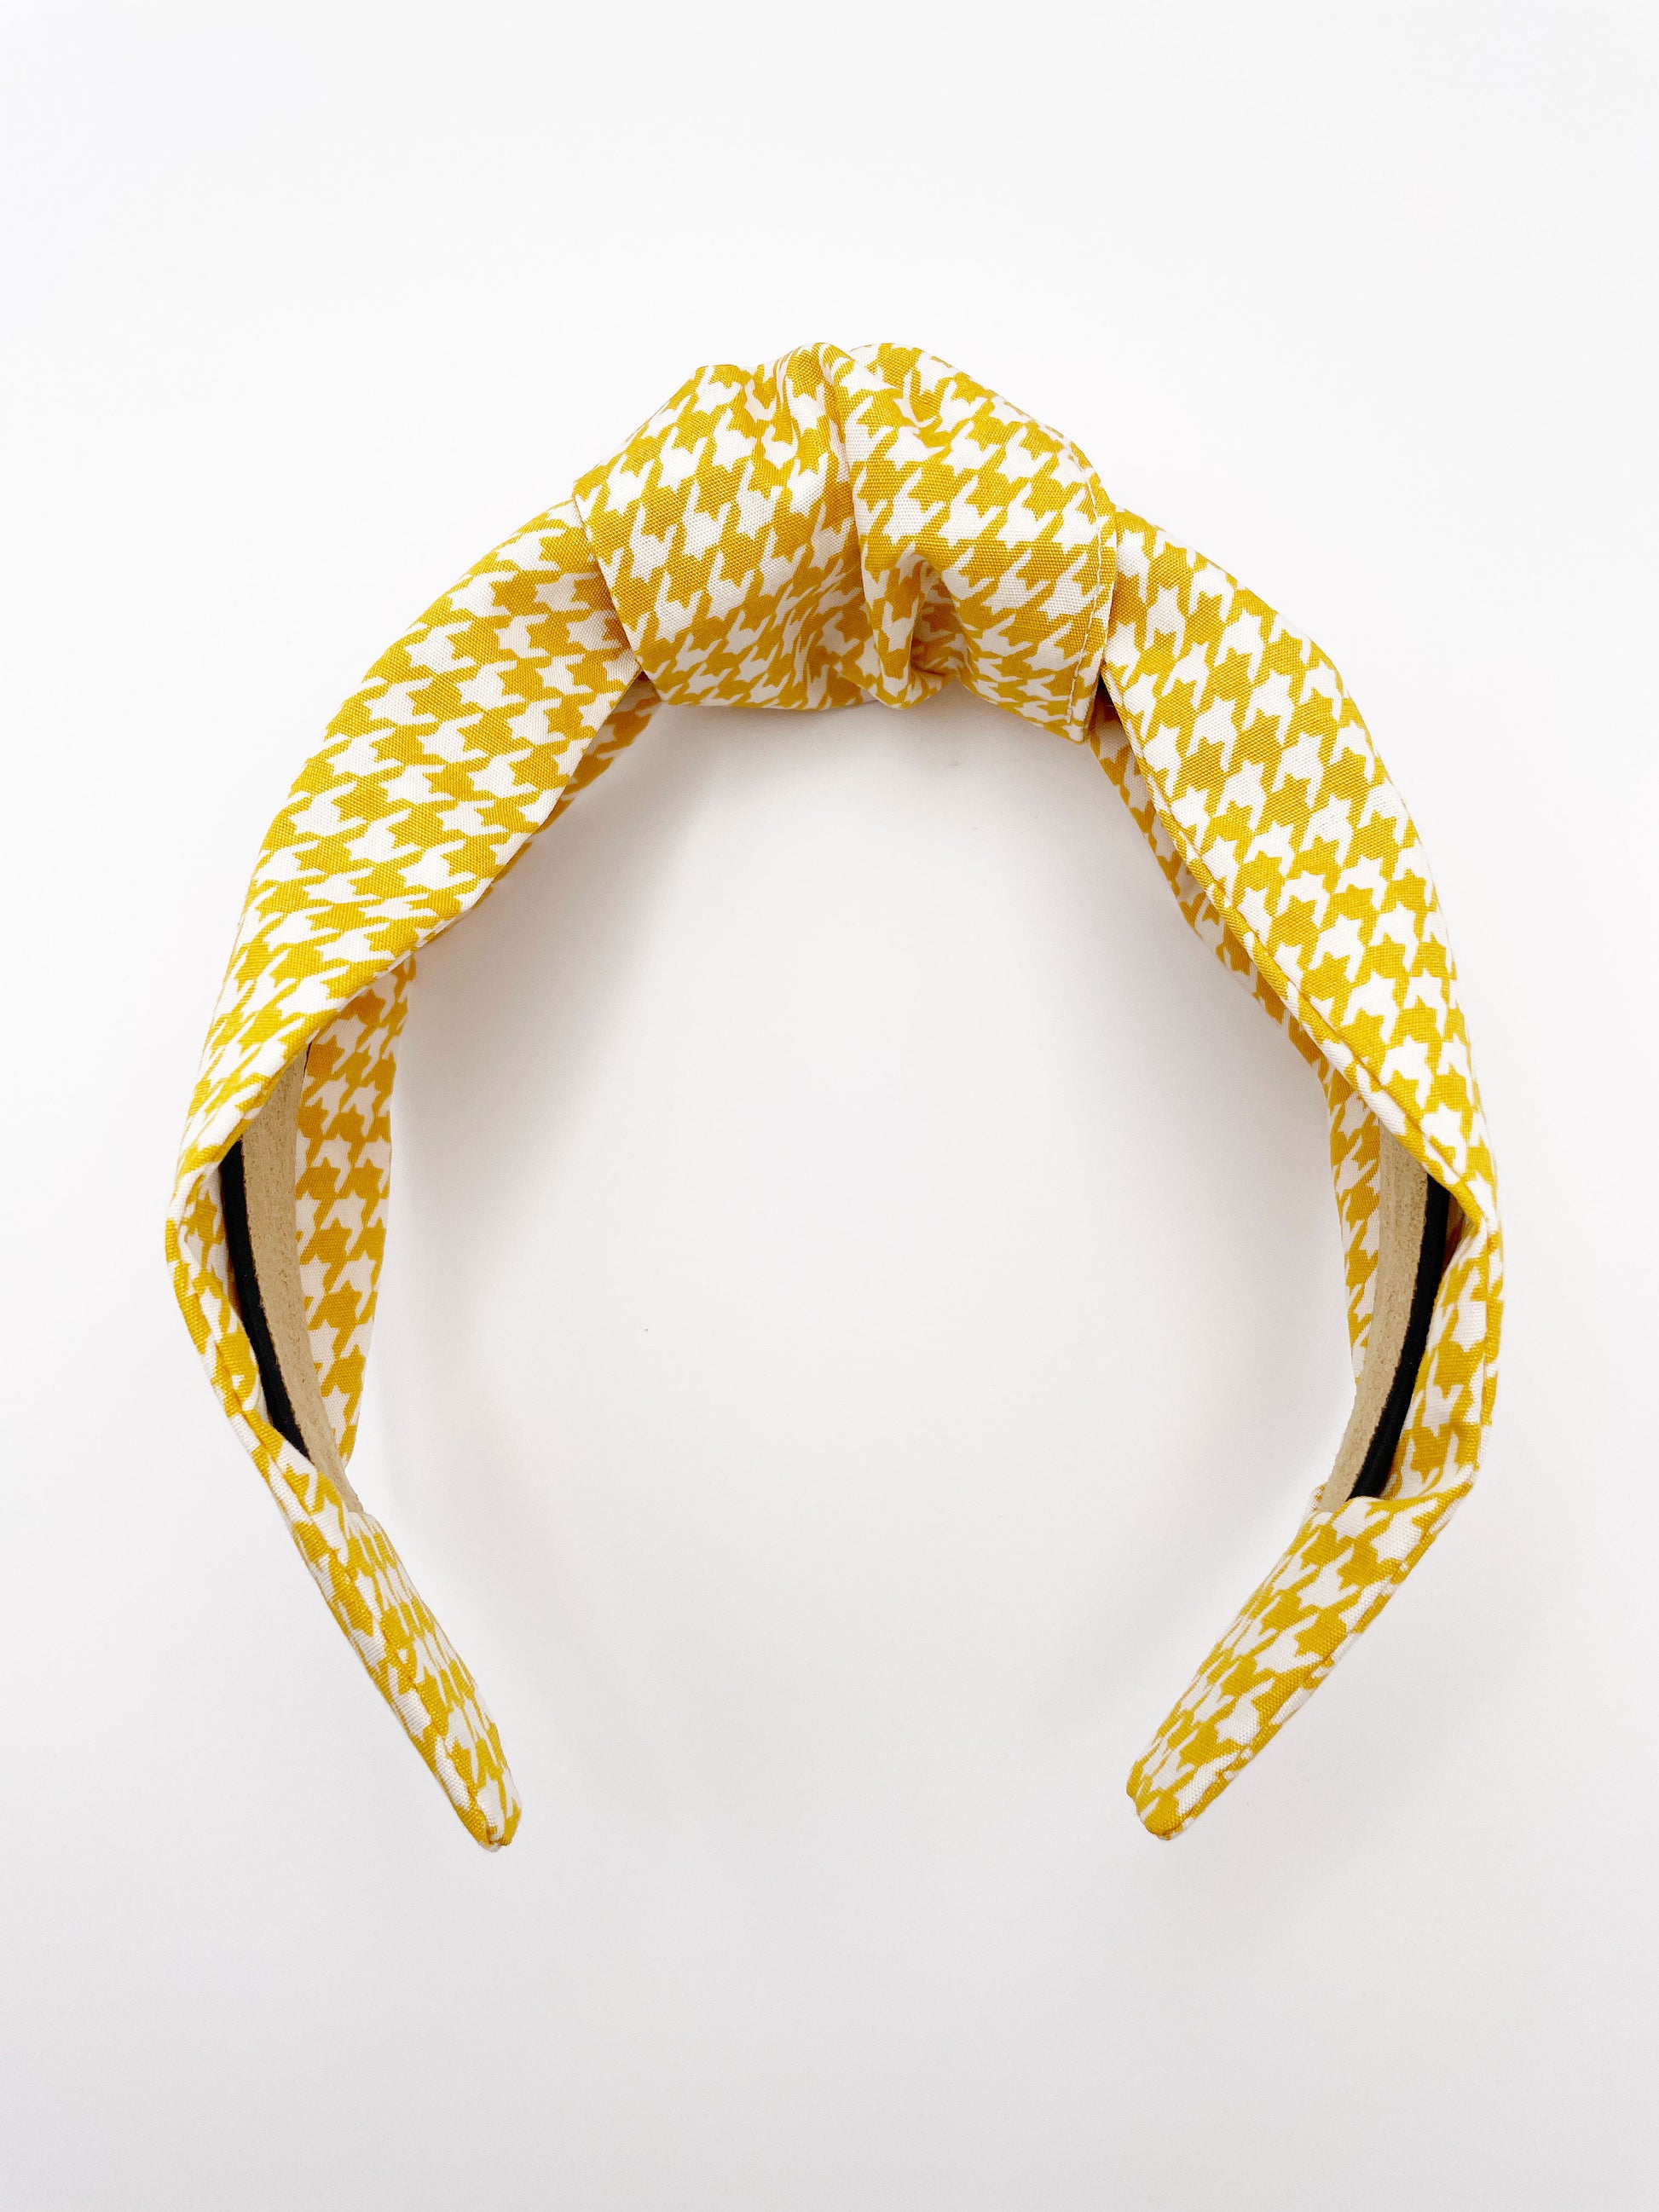 A handmade yellow houndstooth knotted headband.